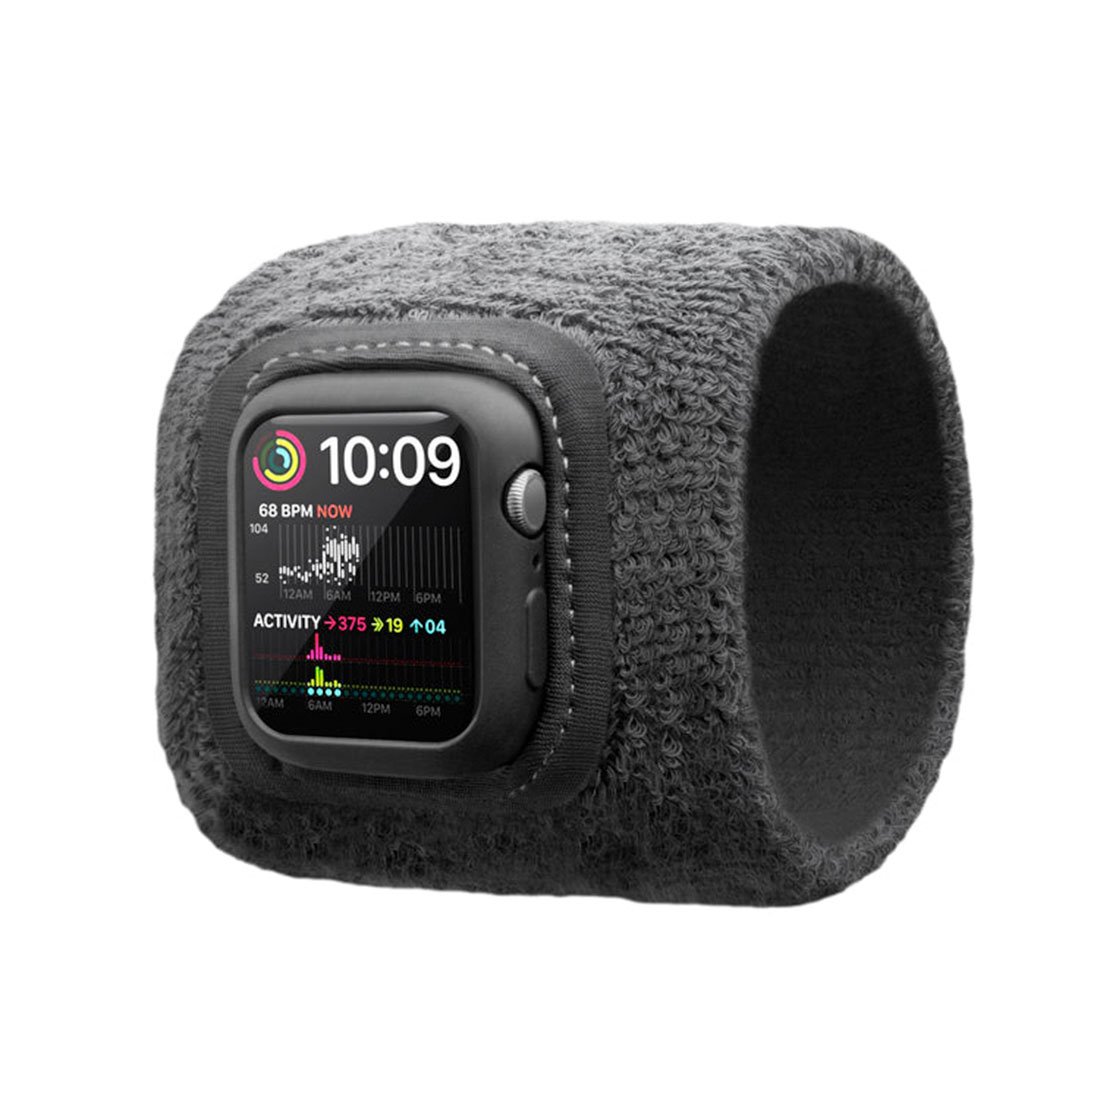 TwelveSouth puzdro ActionBand pre Apple Watch 40mm - Black